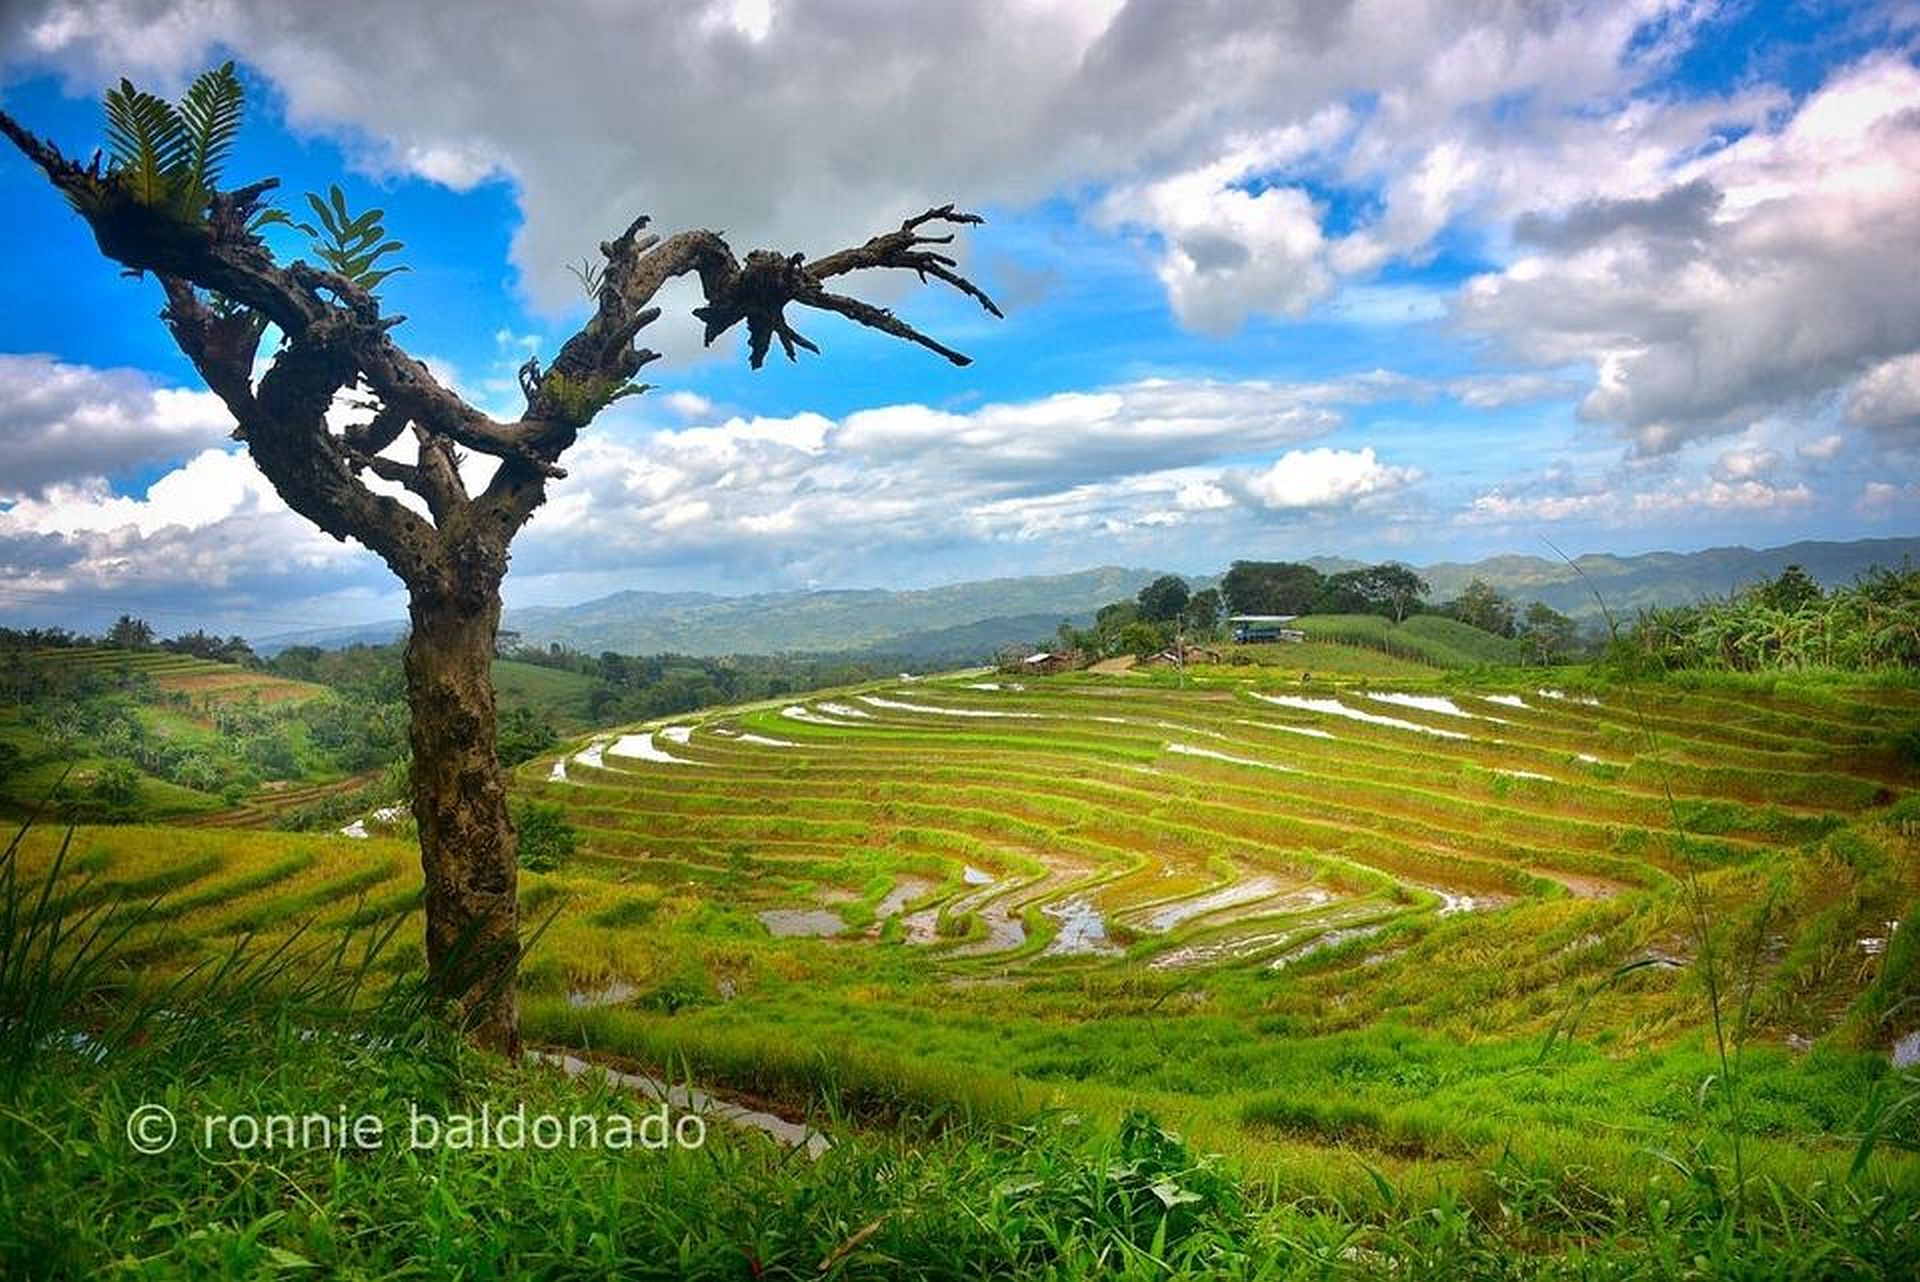 PHILIPPINEN MAGAZIN - REISEZIELE/AUSFLÜGE - Codcod Rice Terraces in San Carlos